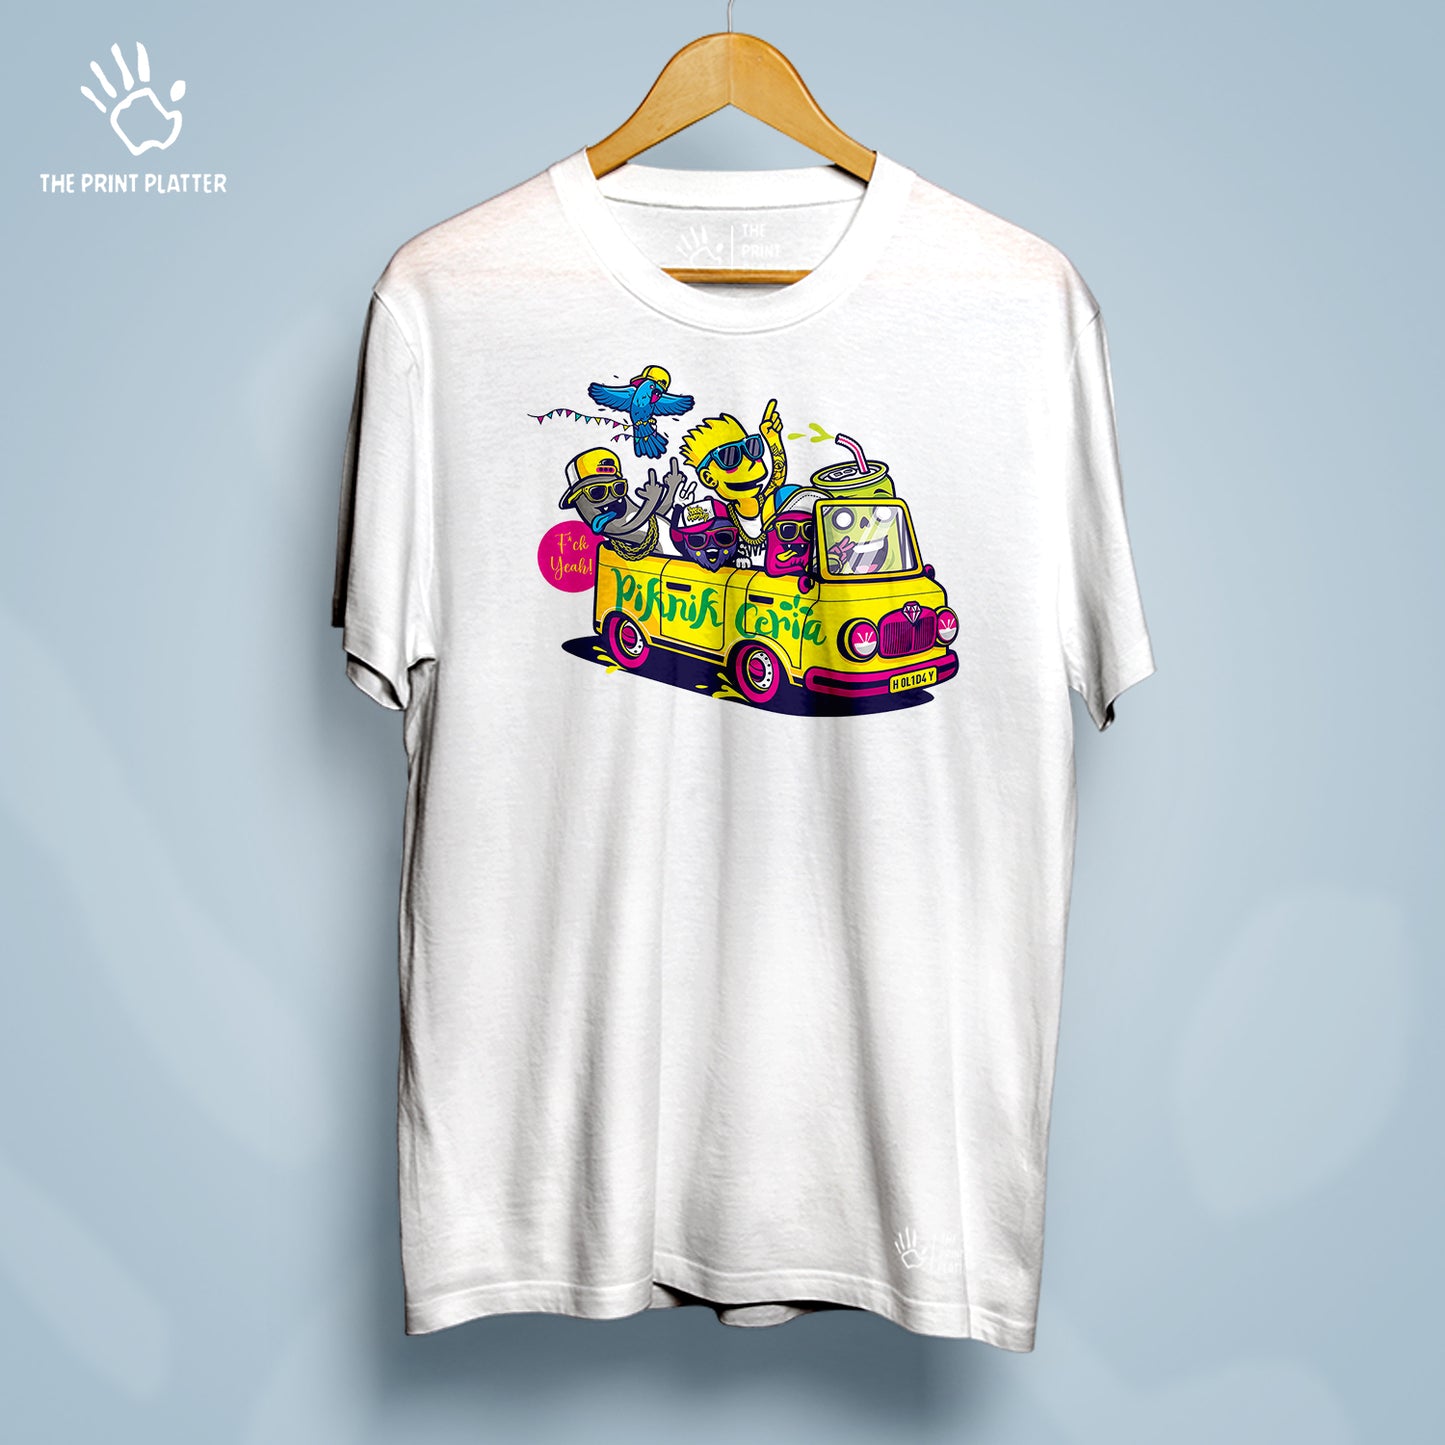 Piknik Ceria Cotton Bio Wash 180gsm T-shirt | T-R202